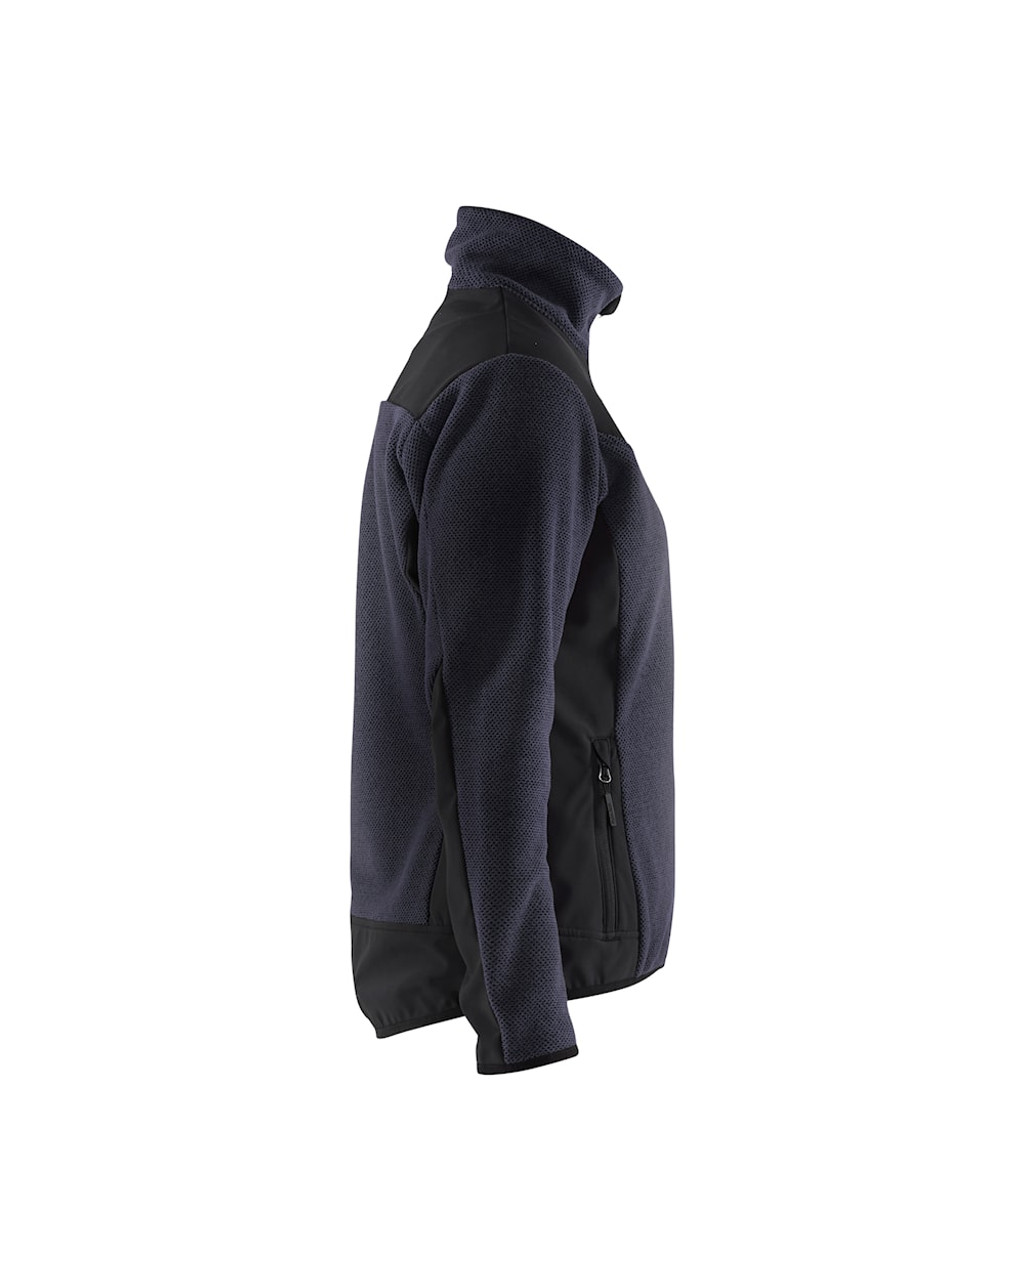 BLAKLADER Jacket | 5943 Womens Dark Navy Blue /Black Jacket Knitted with Full Zip in Polyester Fleece